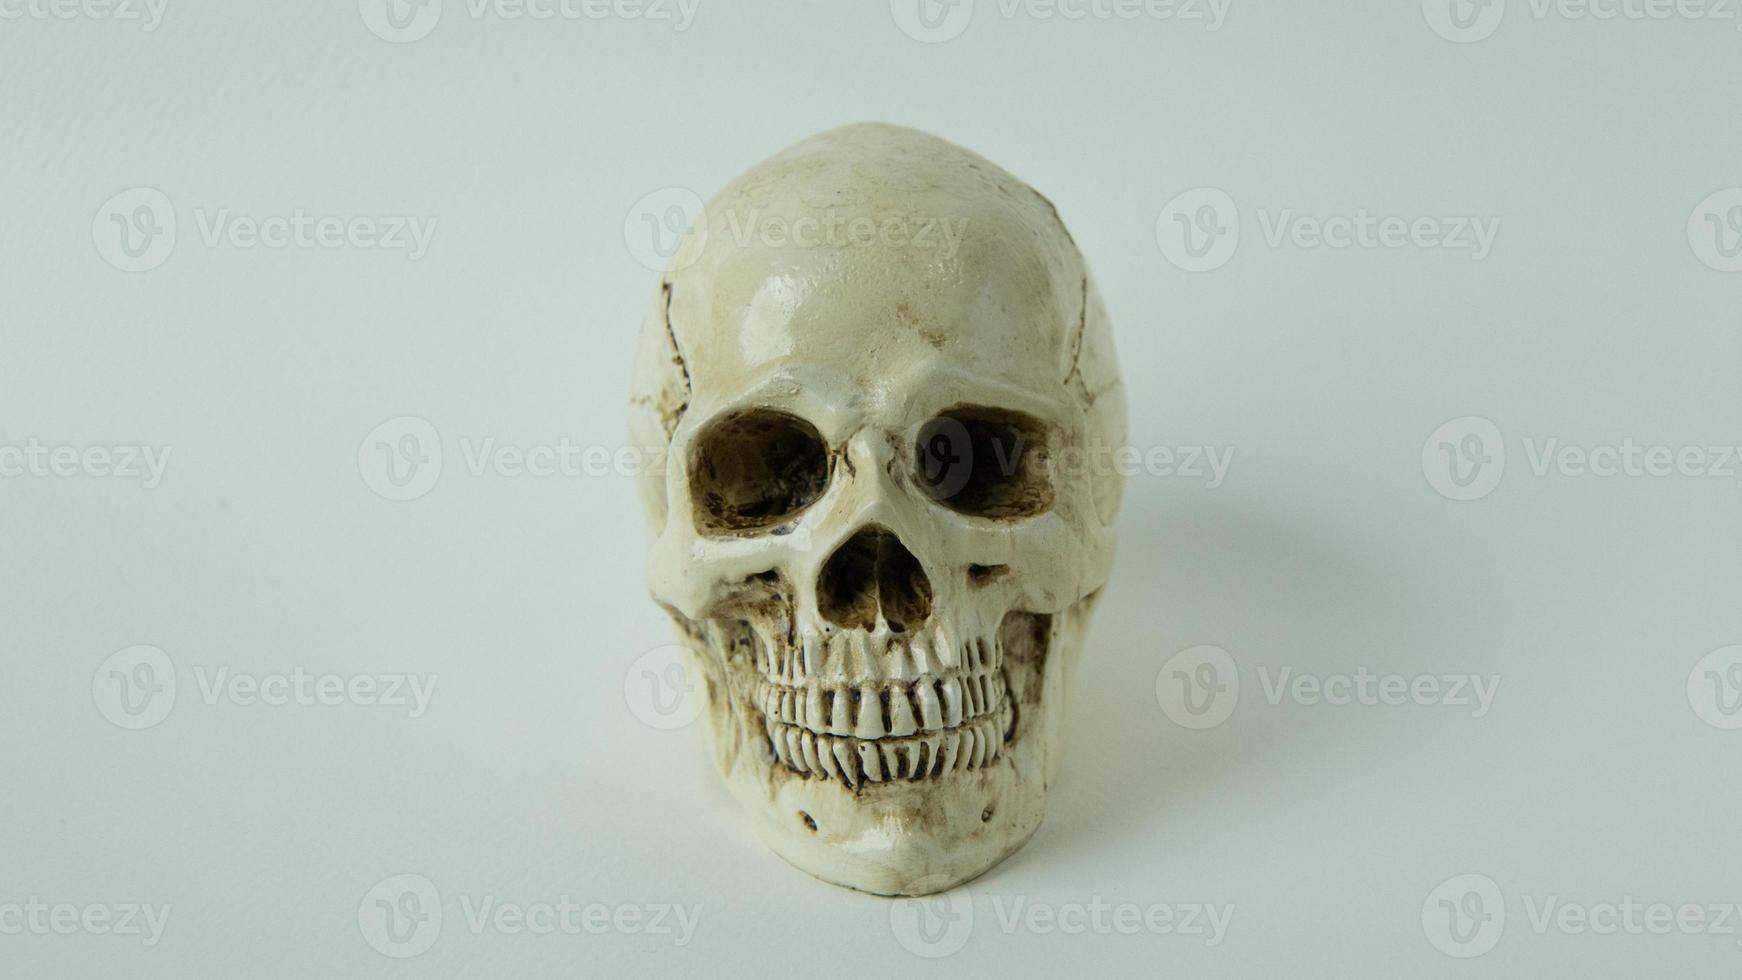 schedel close-up afbeelding op witte achtergrond. foto